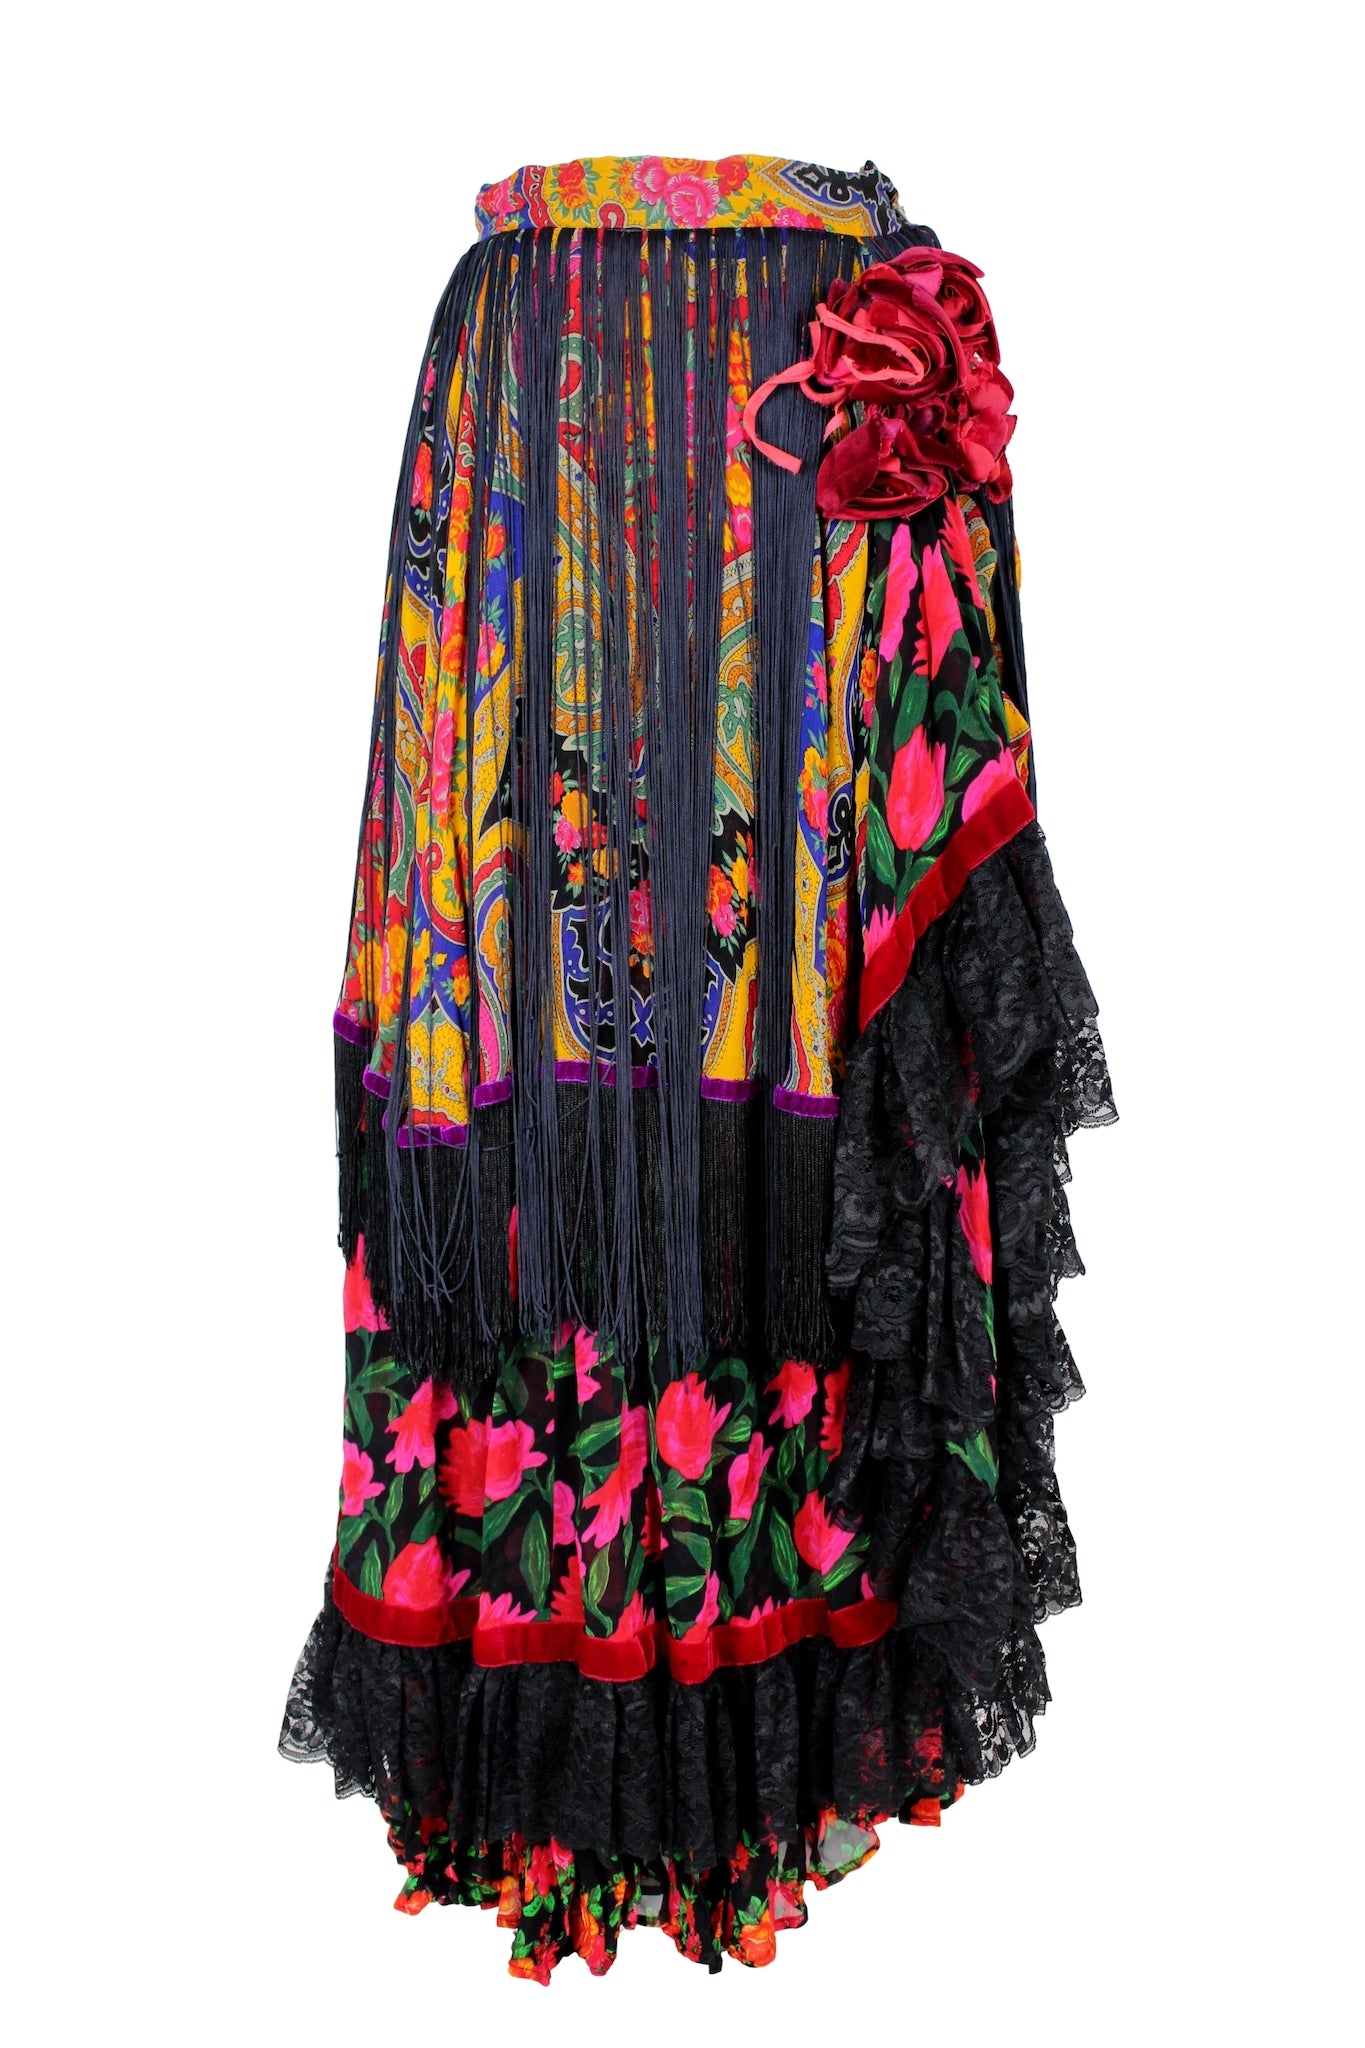 Dolce Gabbana Floral Haute Couture Fringe Lace Skirt Vintage 2000s